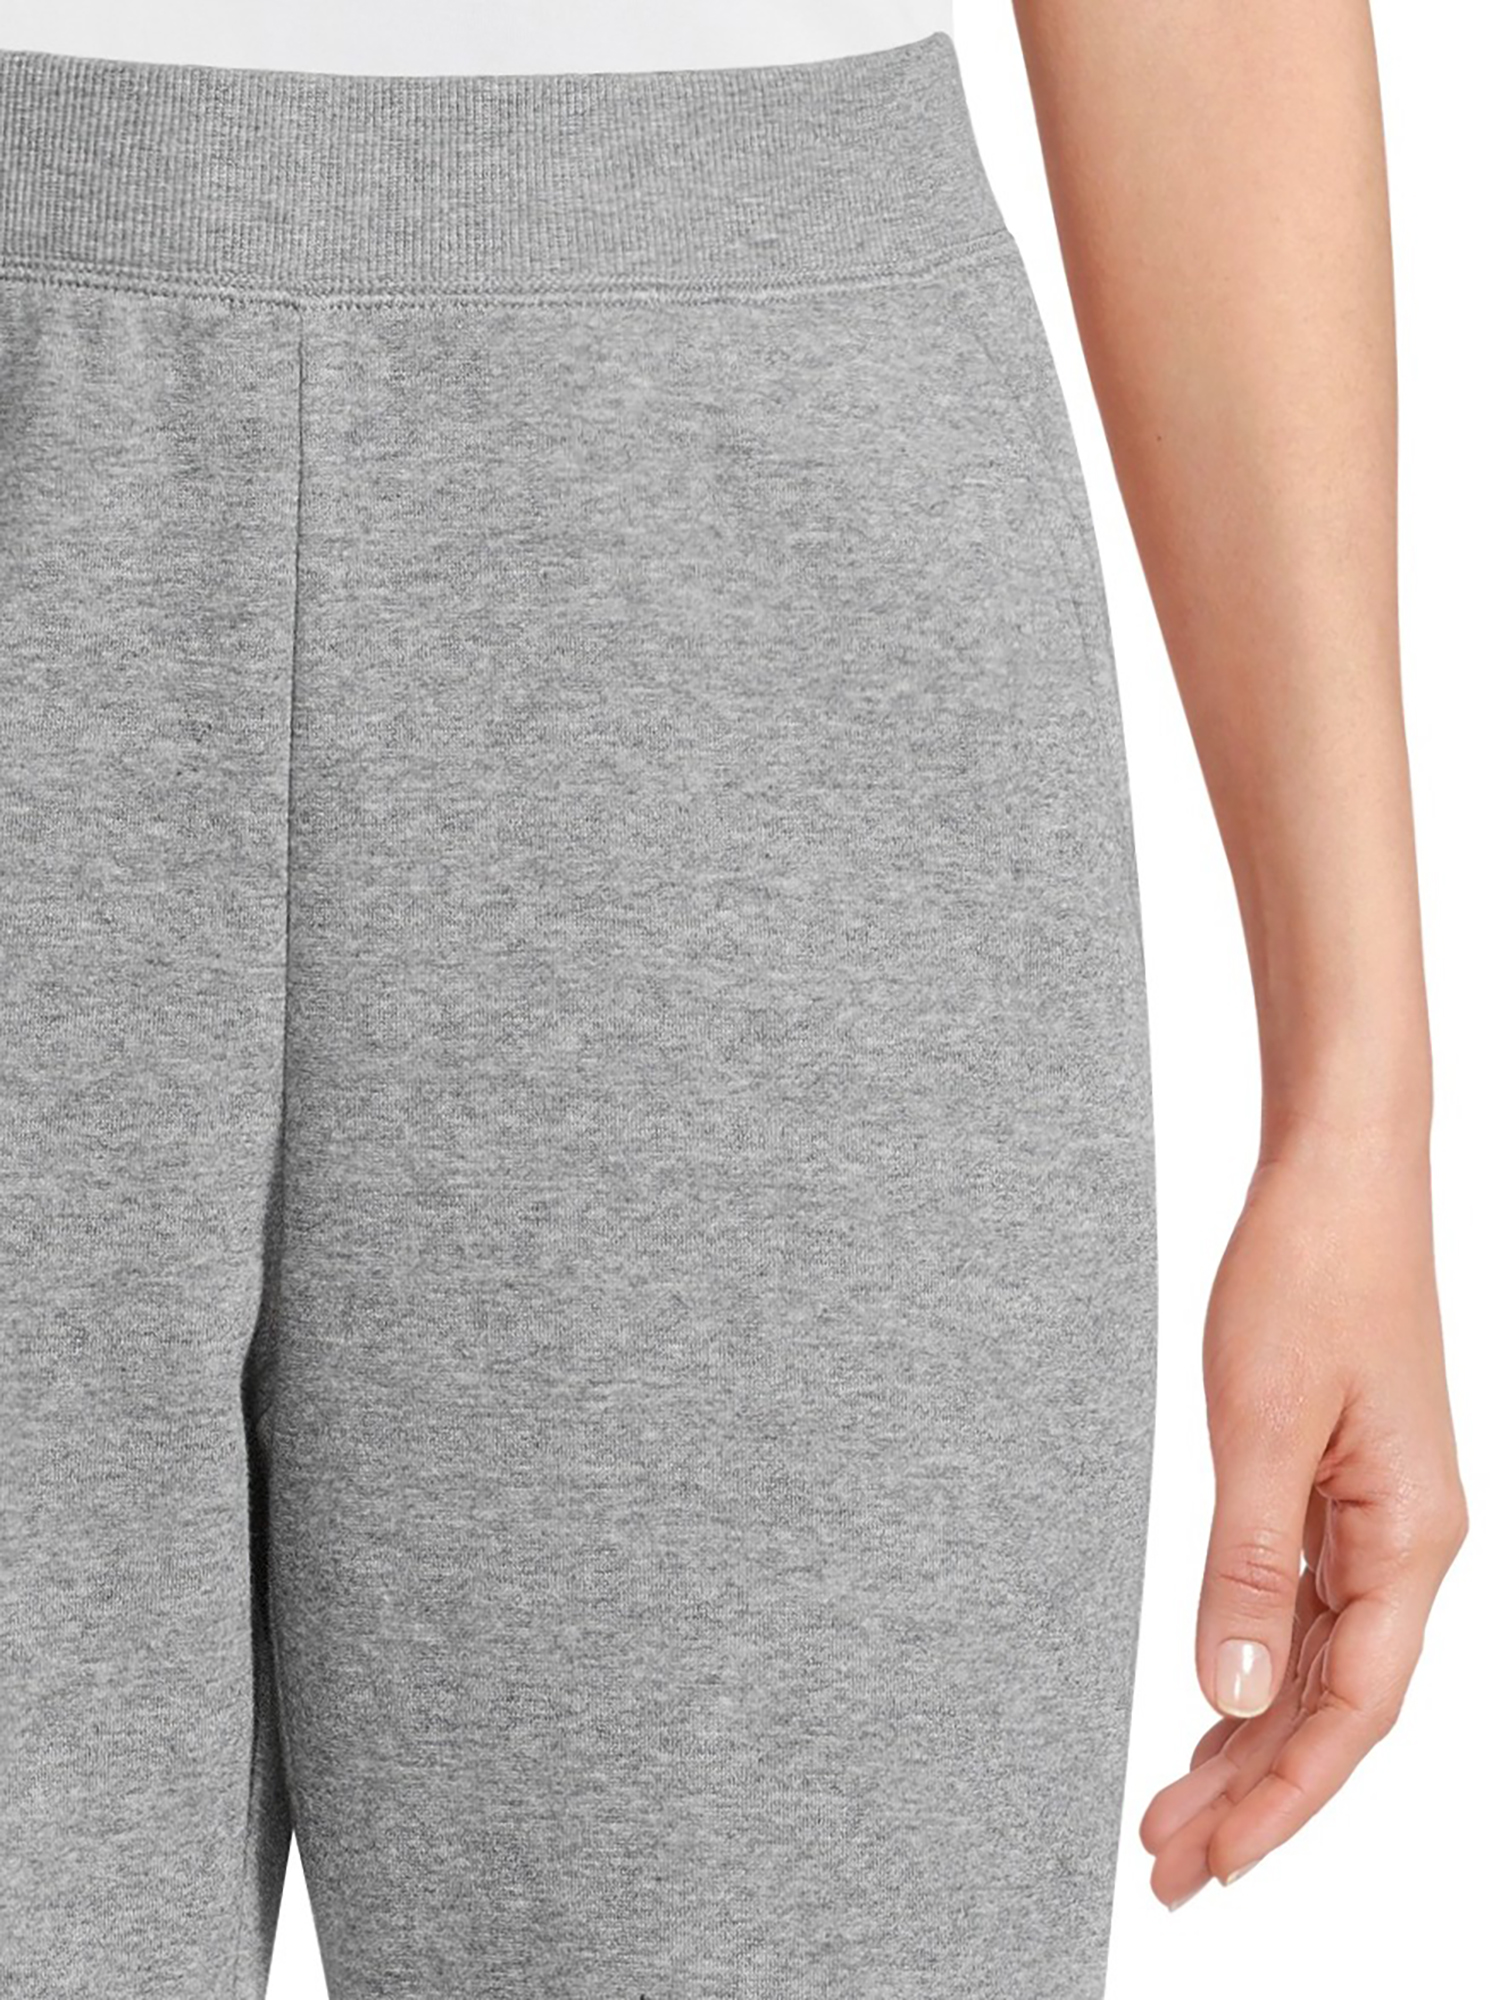 Athletic Works Women's Fleece Jogger Pants, 28” Inseam, Sizes XS-XXXL ...